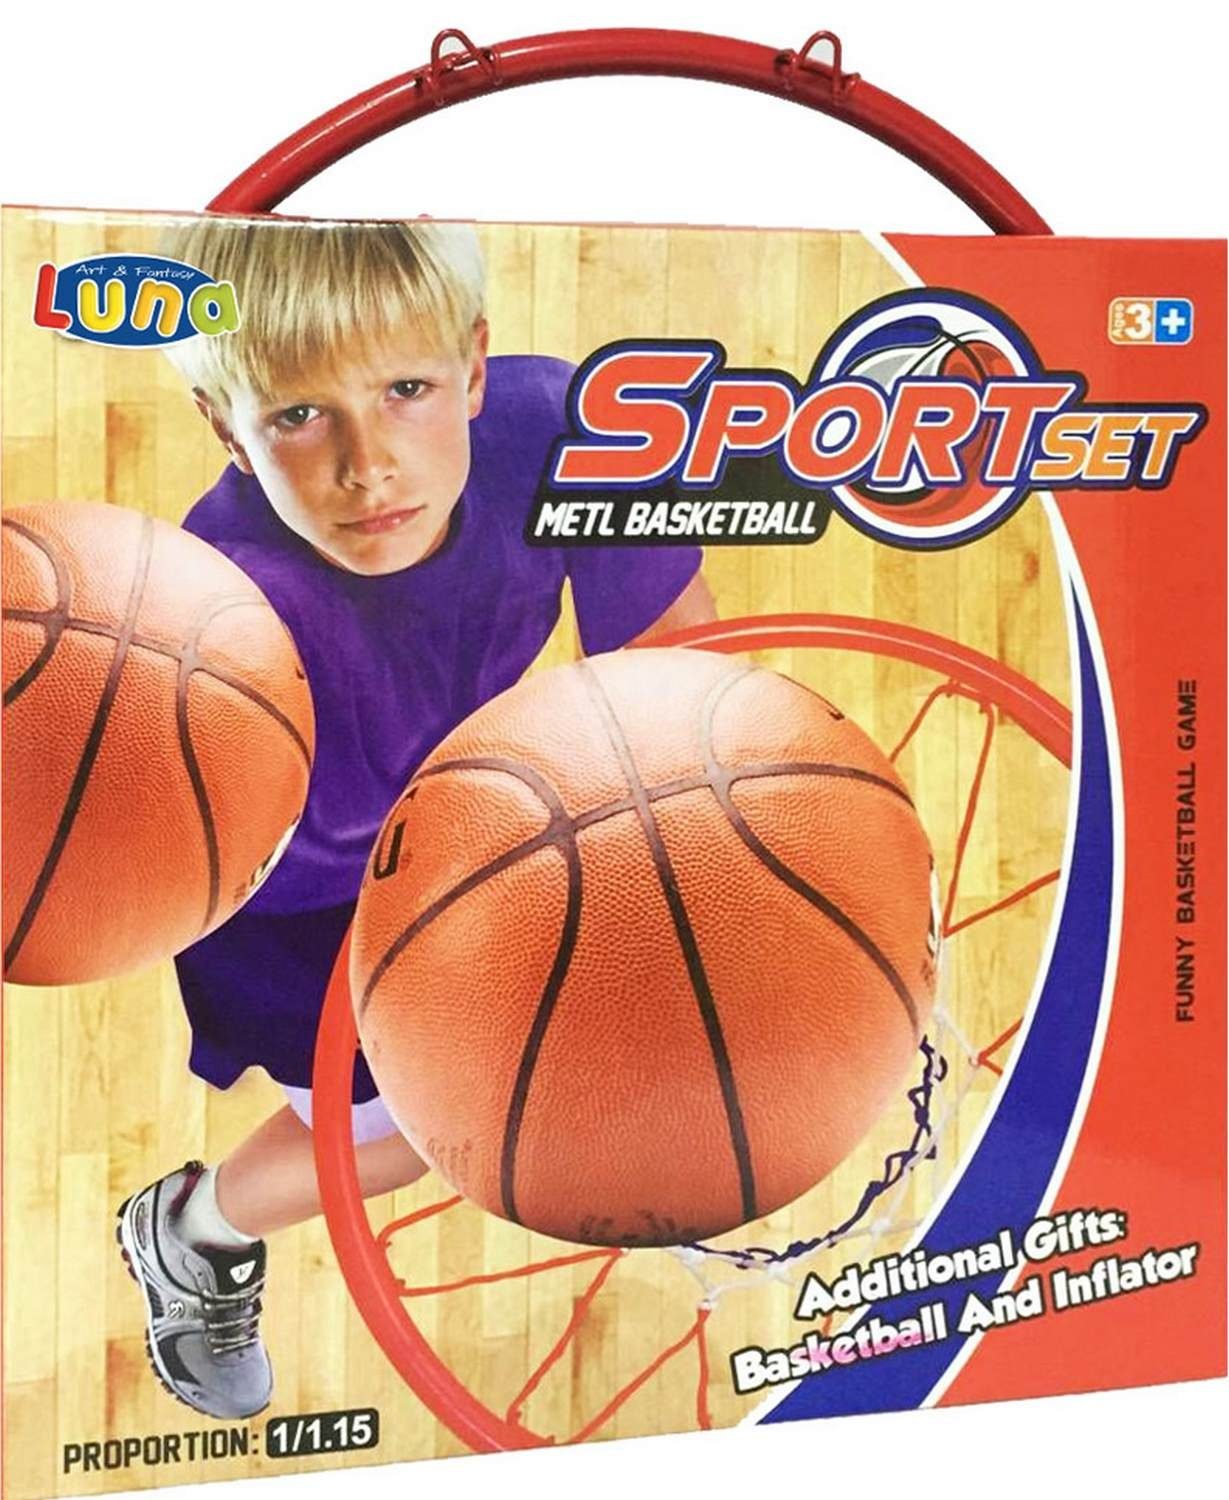 Diakakis Basketballkorb Kinder Basketball mit Korb Netz Basketball Pumpe